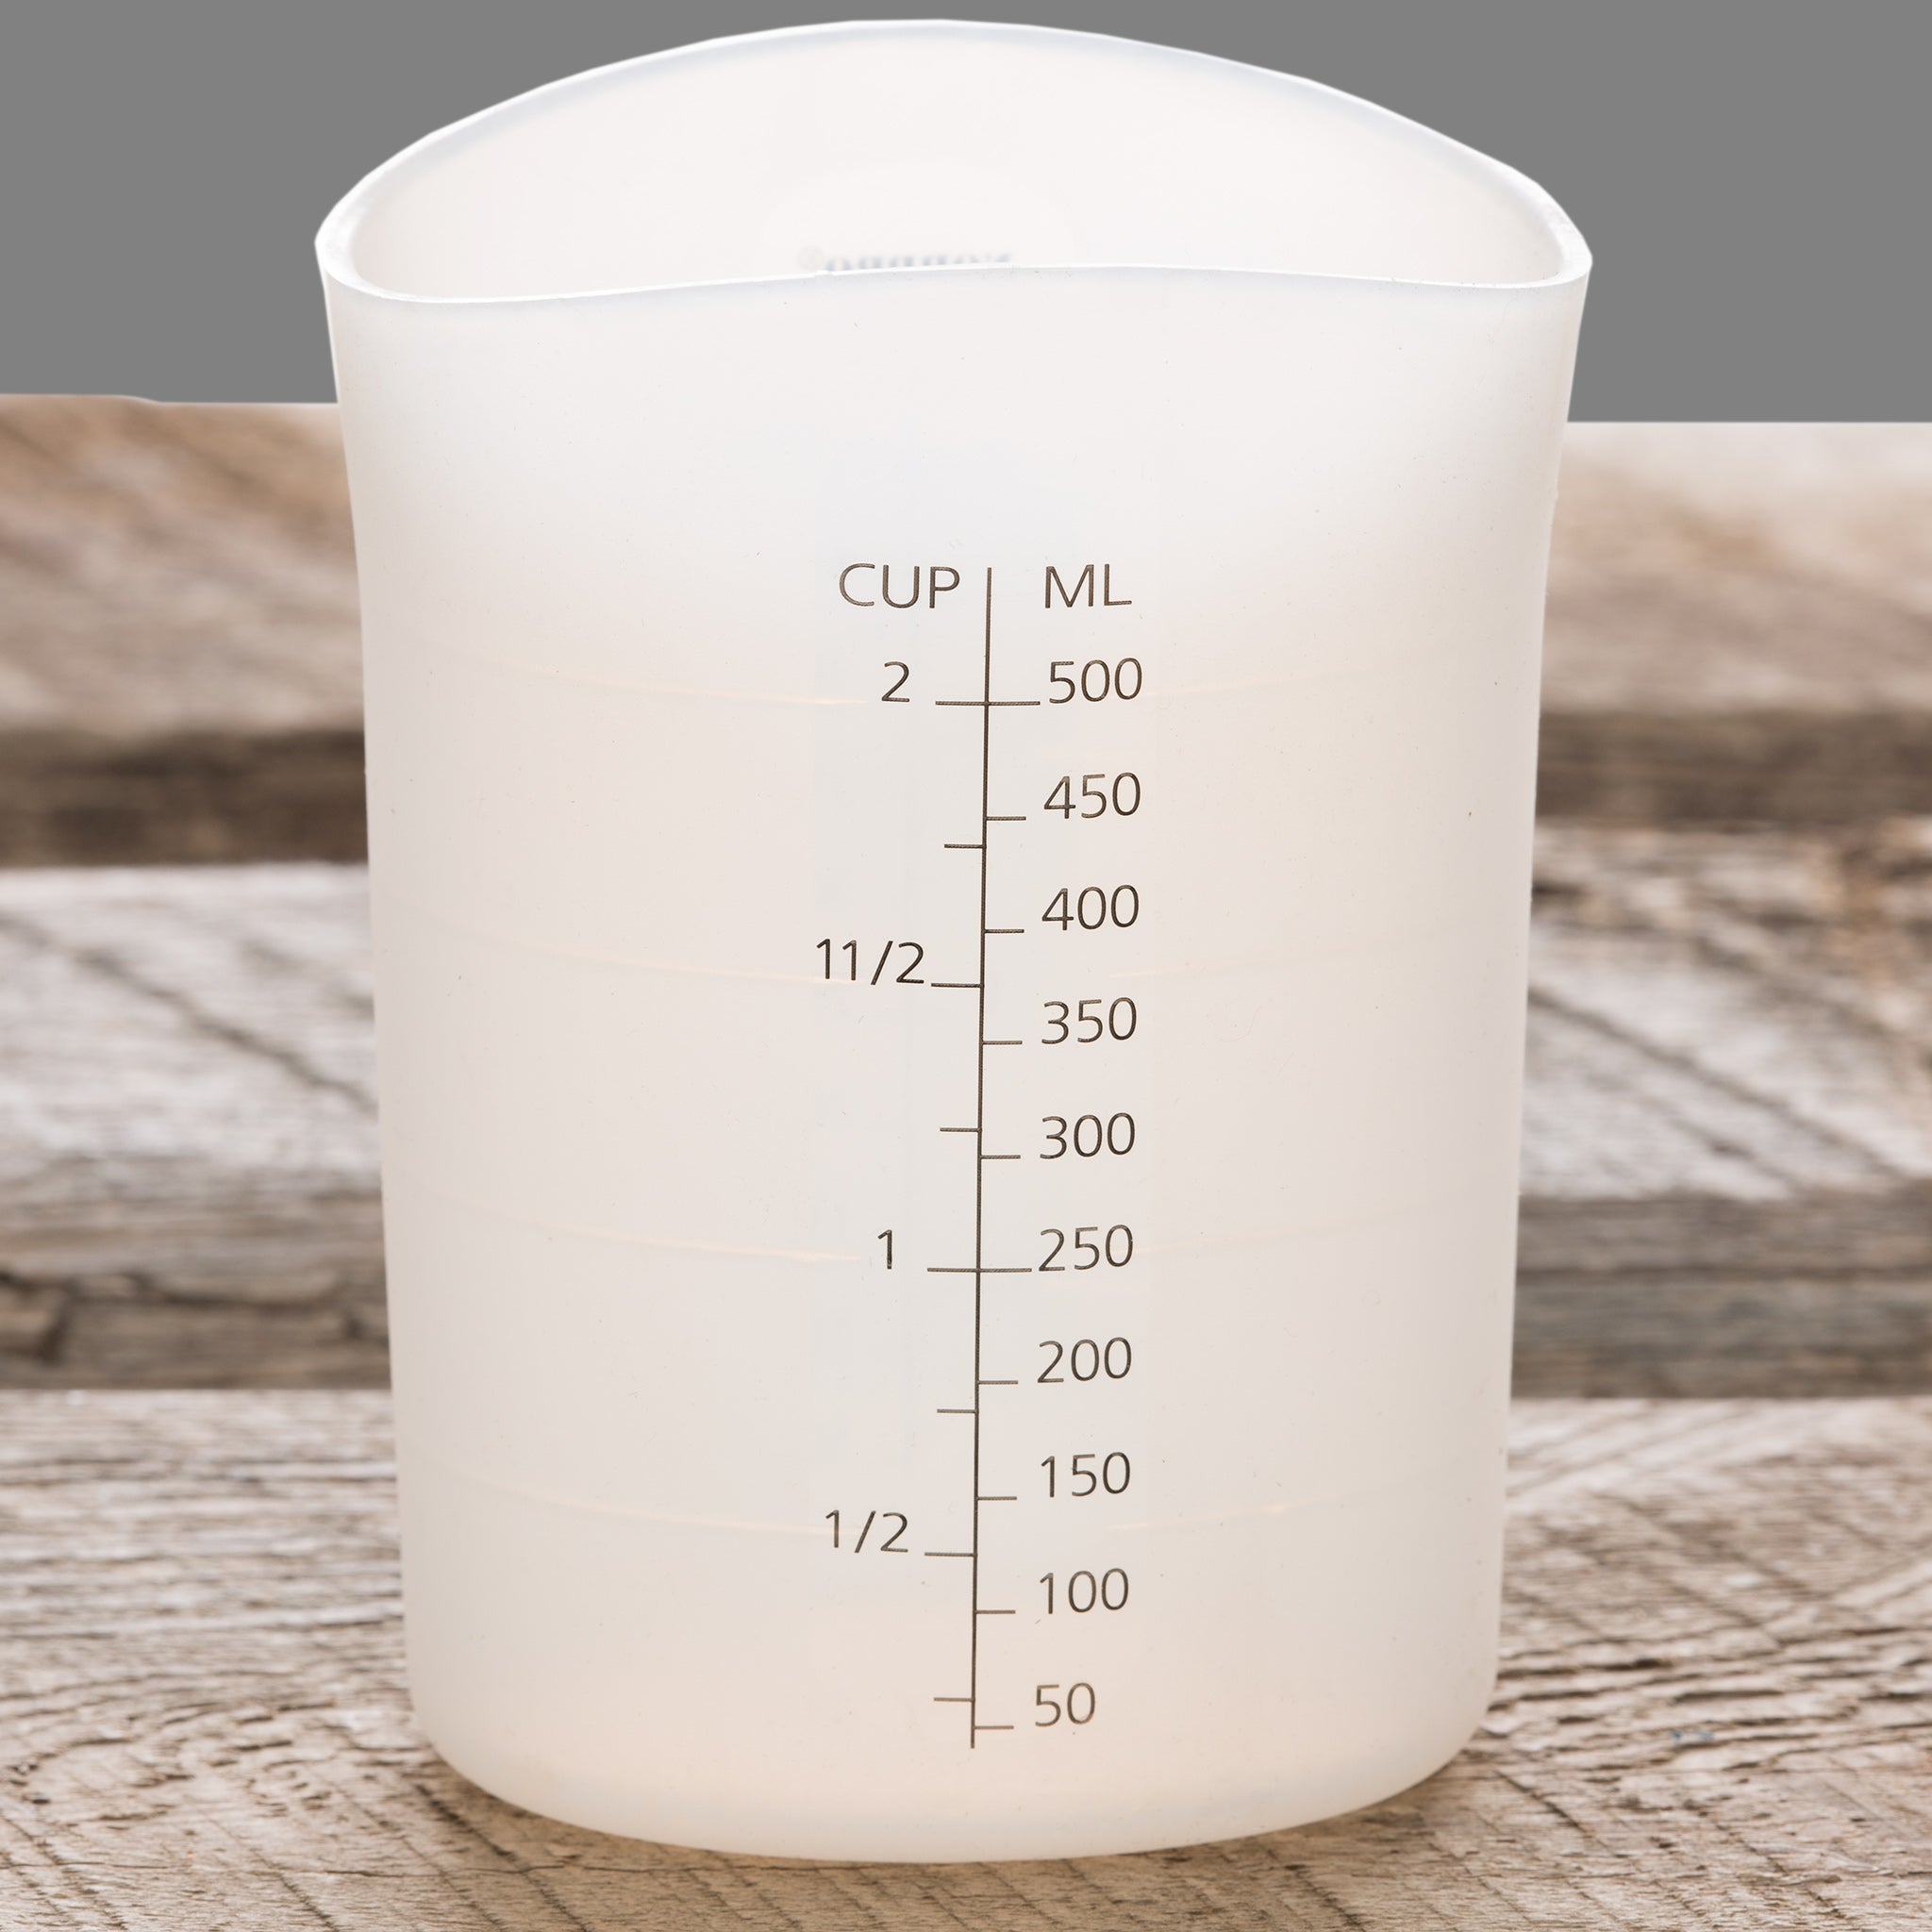 Flexible Measuring Cups Silicone Measurment Cup Set For Melt Stir 